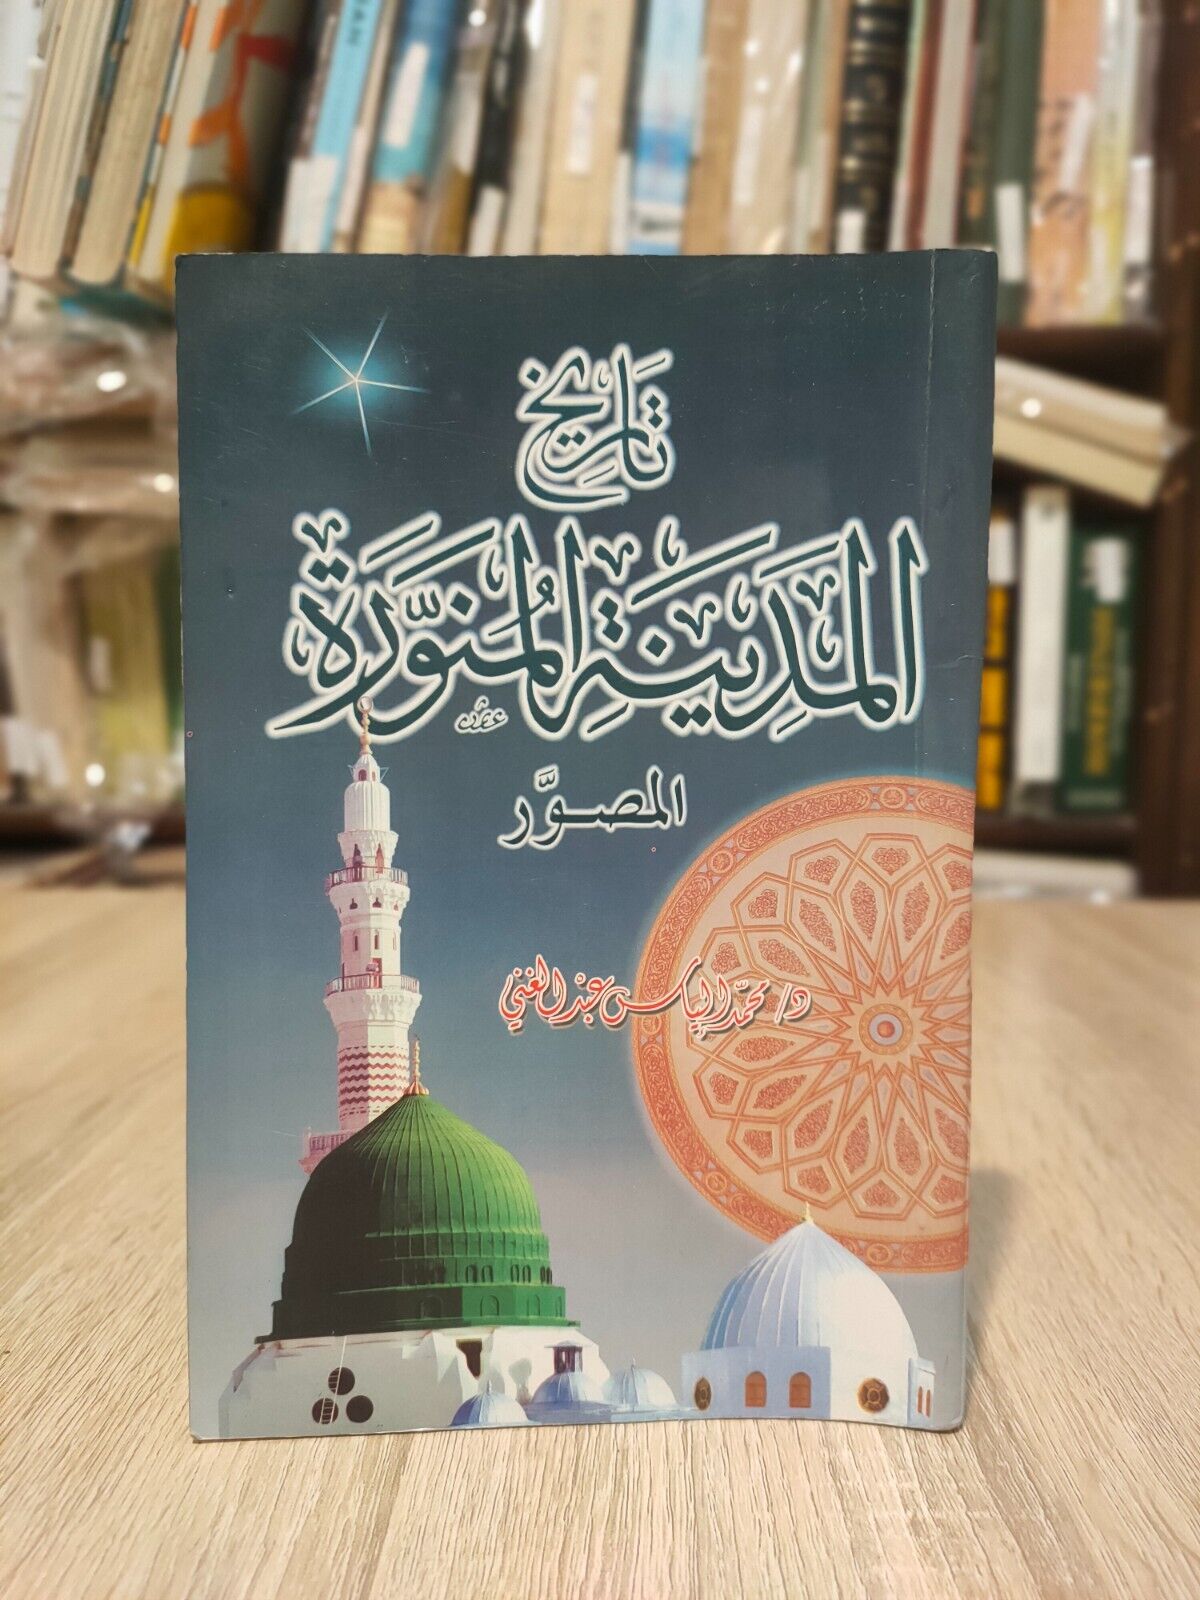 2003 The Illustrated History of Medina تاريخ المدينة المنورة المصور 2003 Islamic